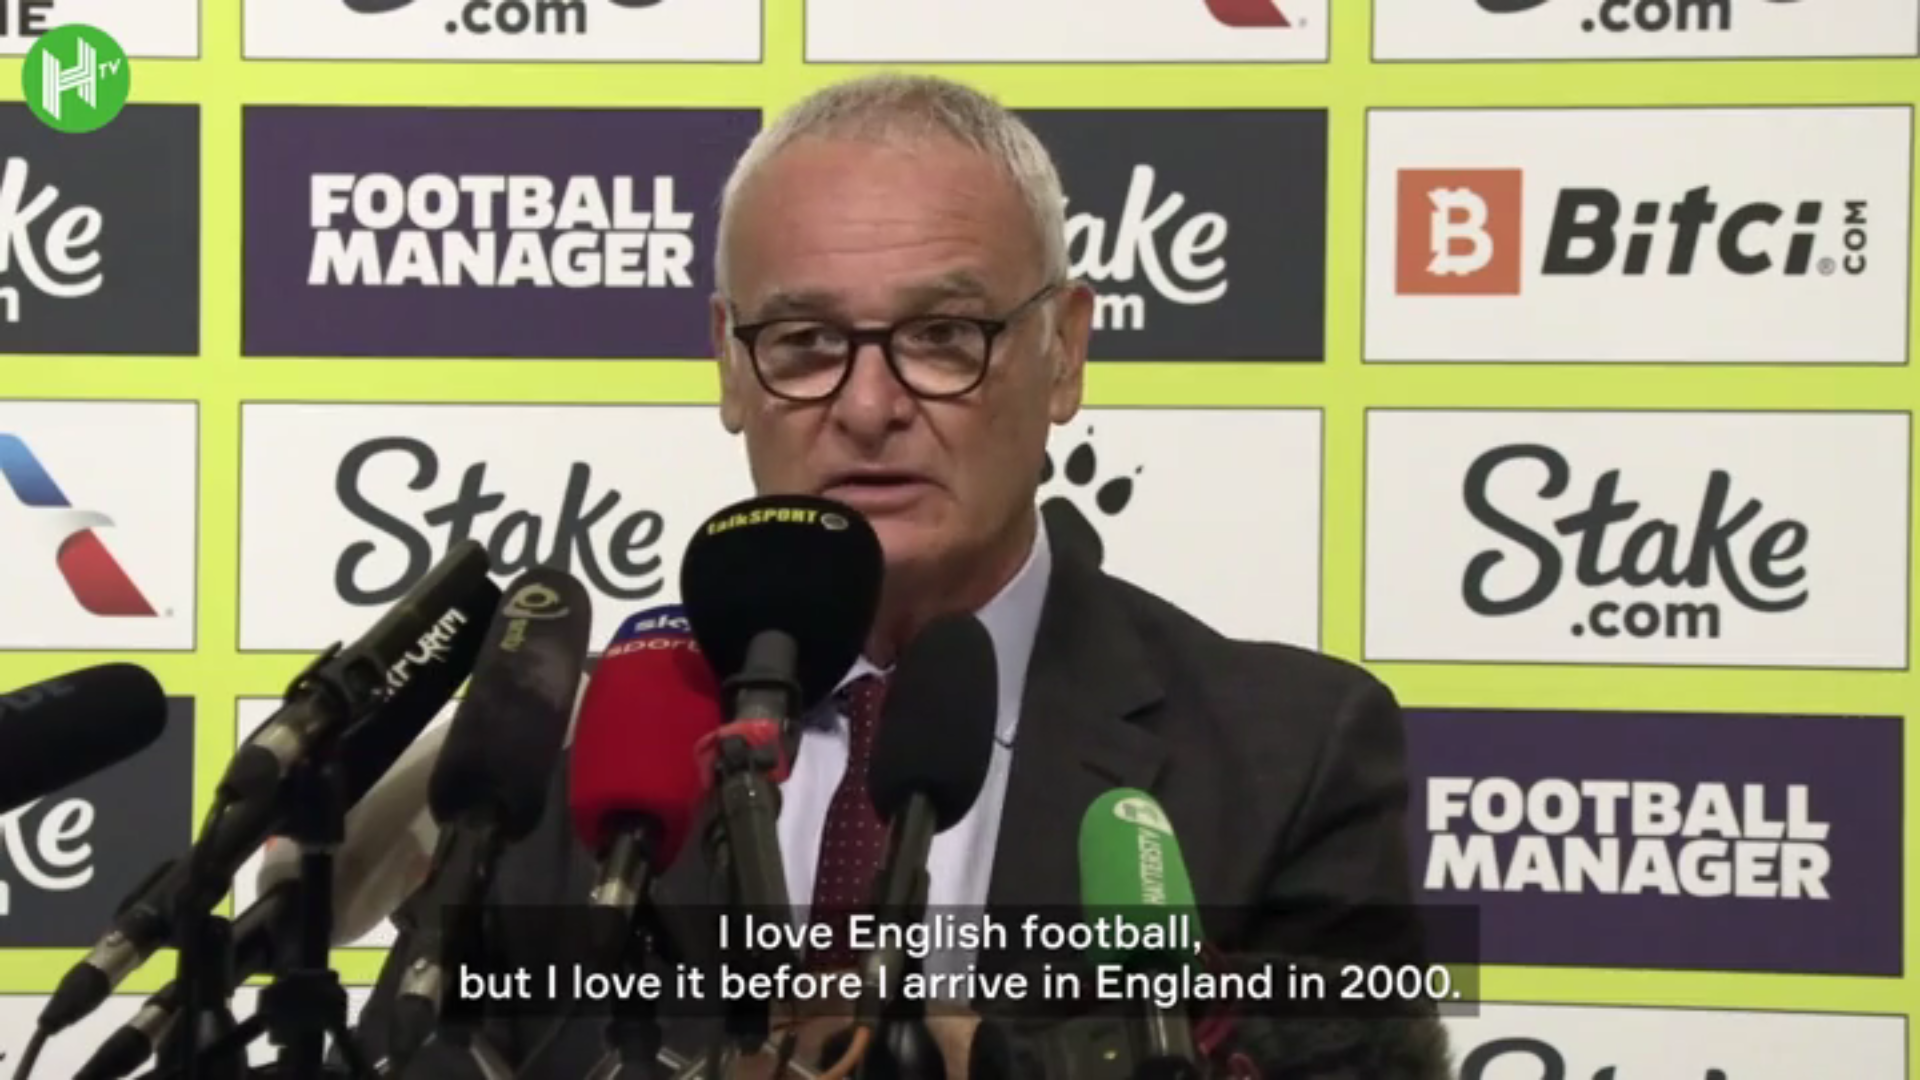 VIDEO: Kembali ke Liga Inggris, Claudio Ranieri Bakal Traktir Skuad Watford Jika Nirbobol Lawan Liverpool